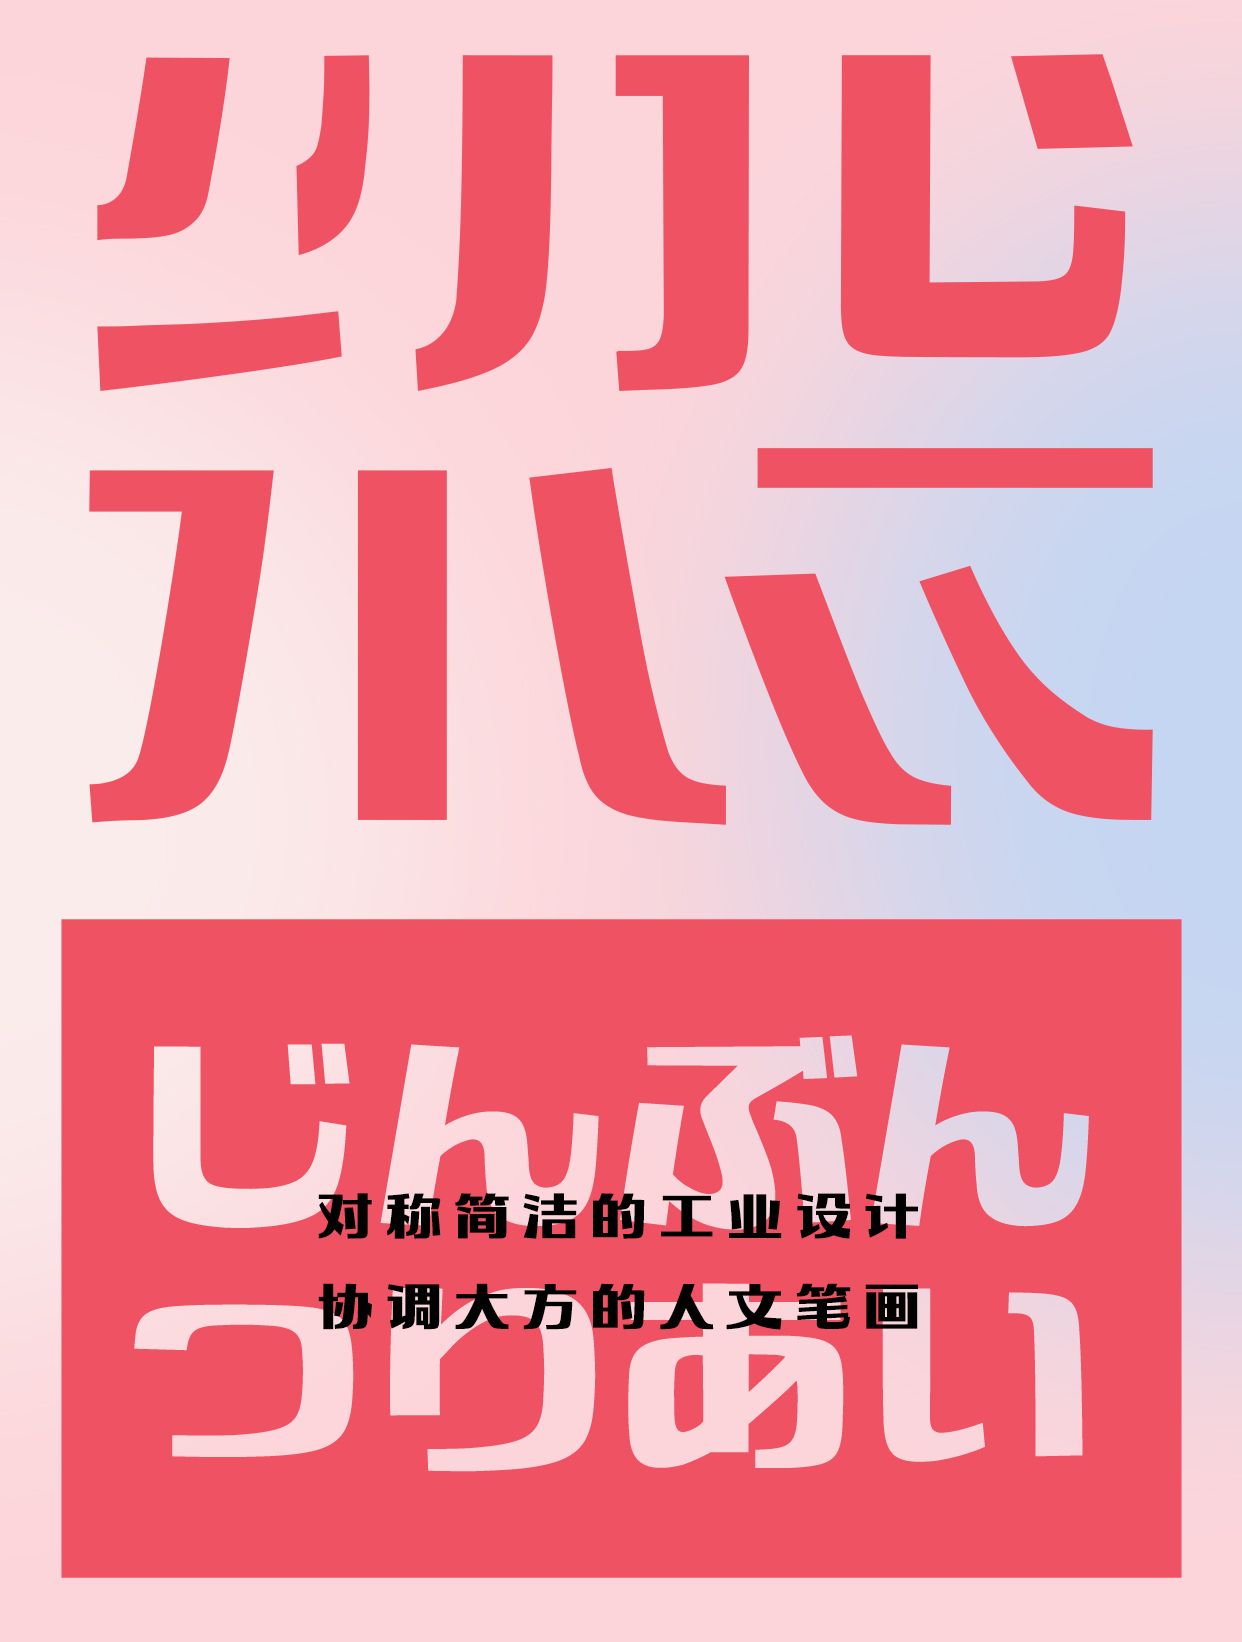 GEETYPE上野森黑体字体专业描述图解